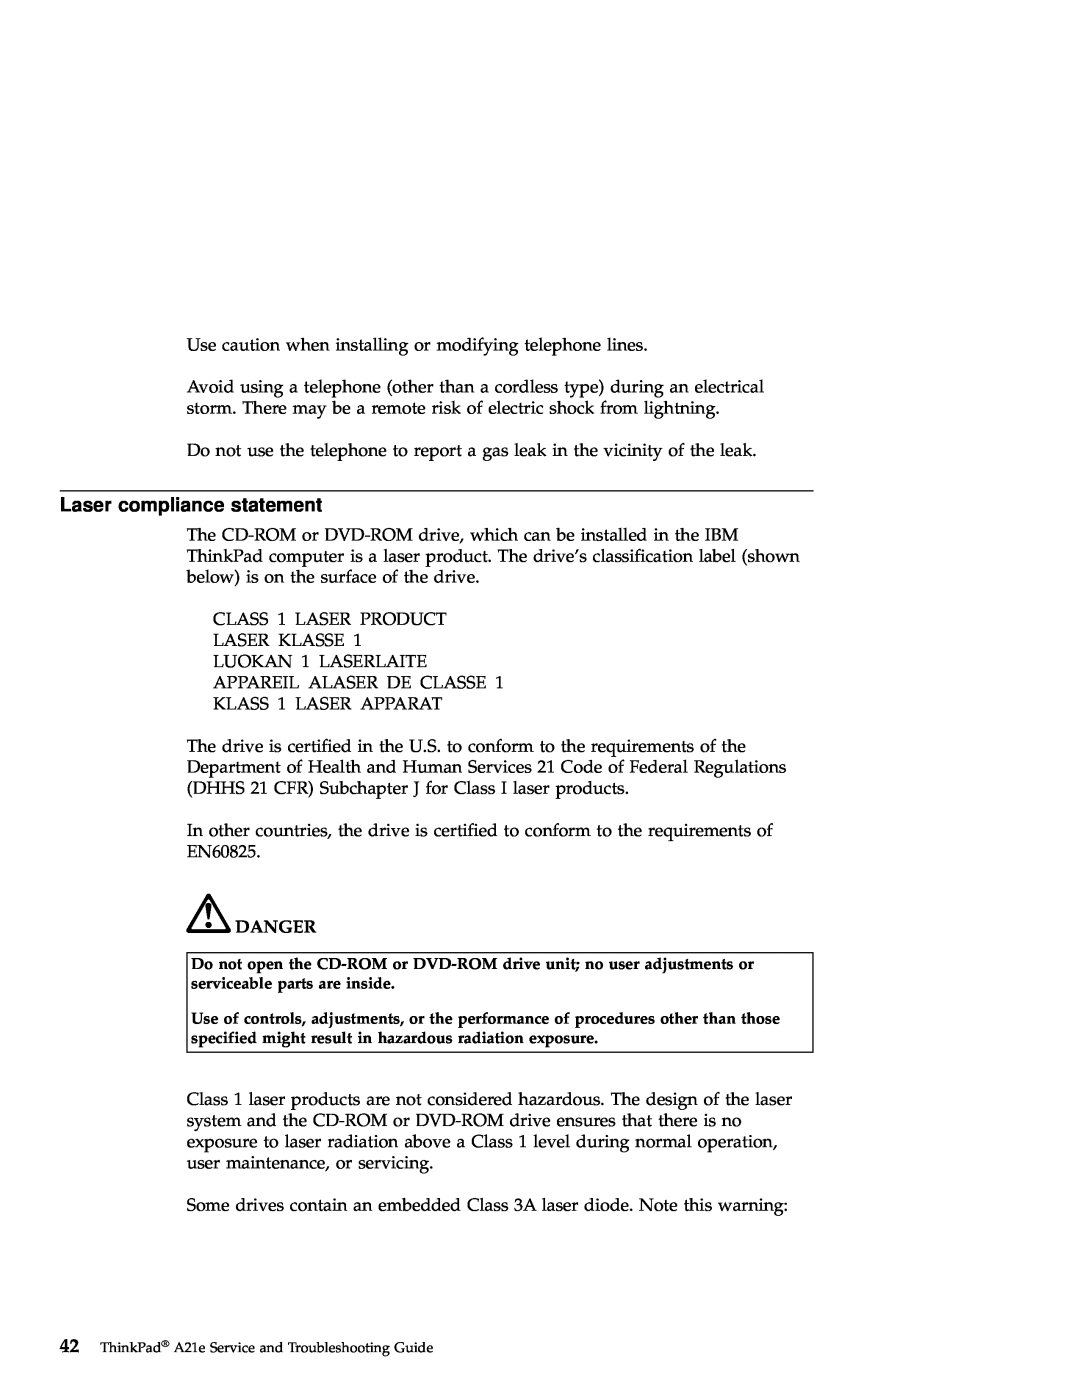 IBM A21e manual Laser compliance statement, Danger 